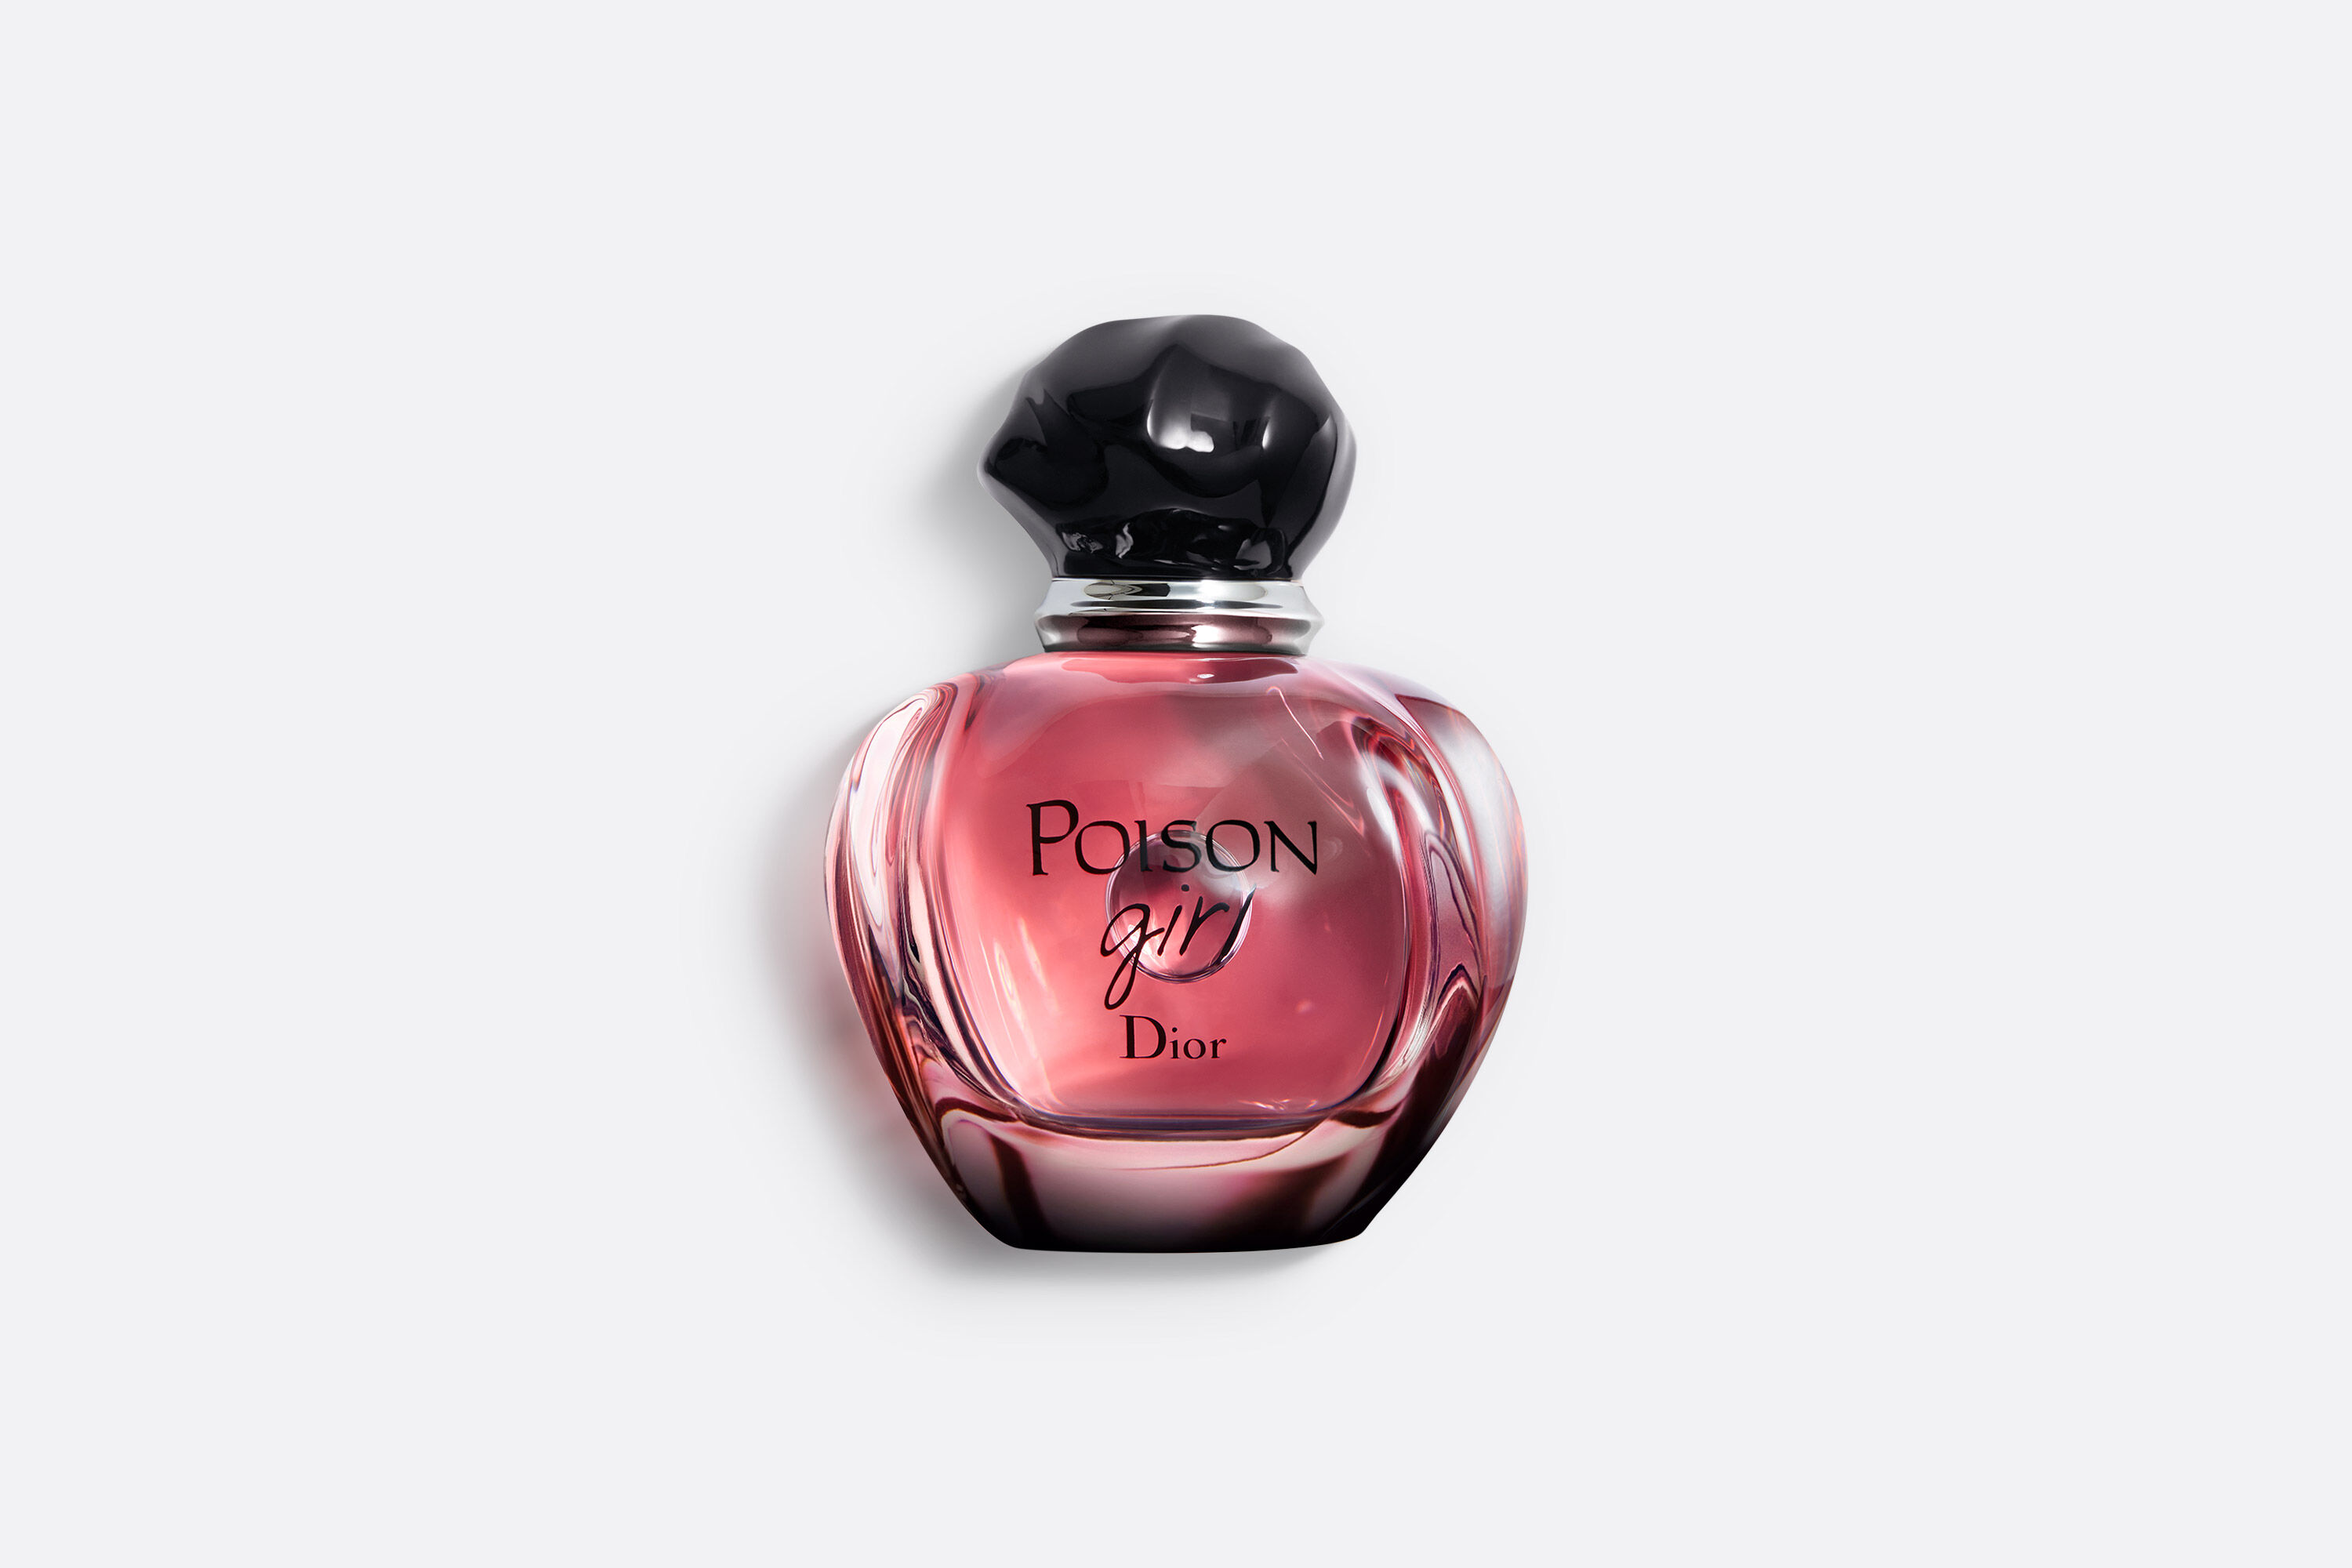 Poison Girl Eau De Toilette Dior аромат  аромат для женщин 2017